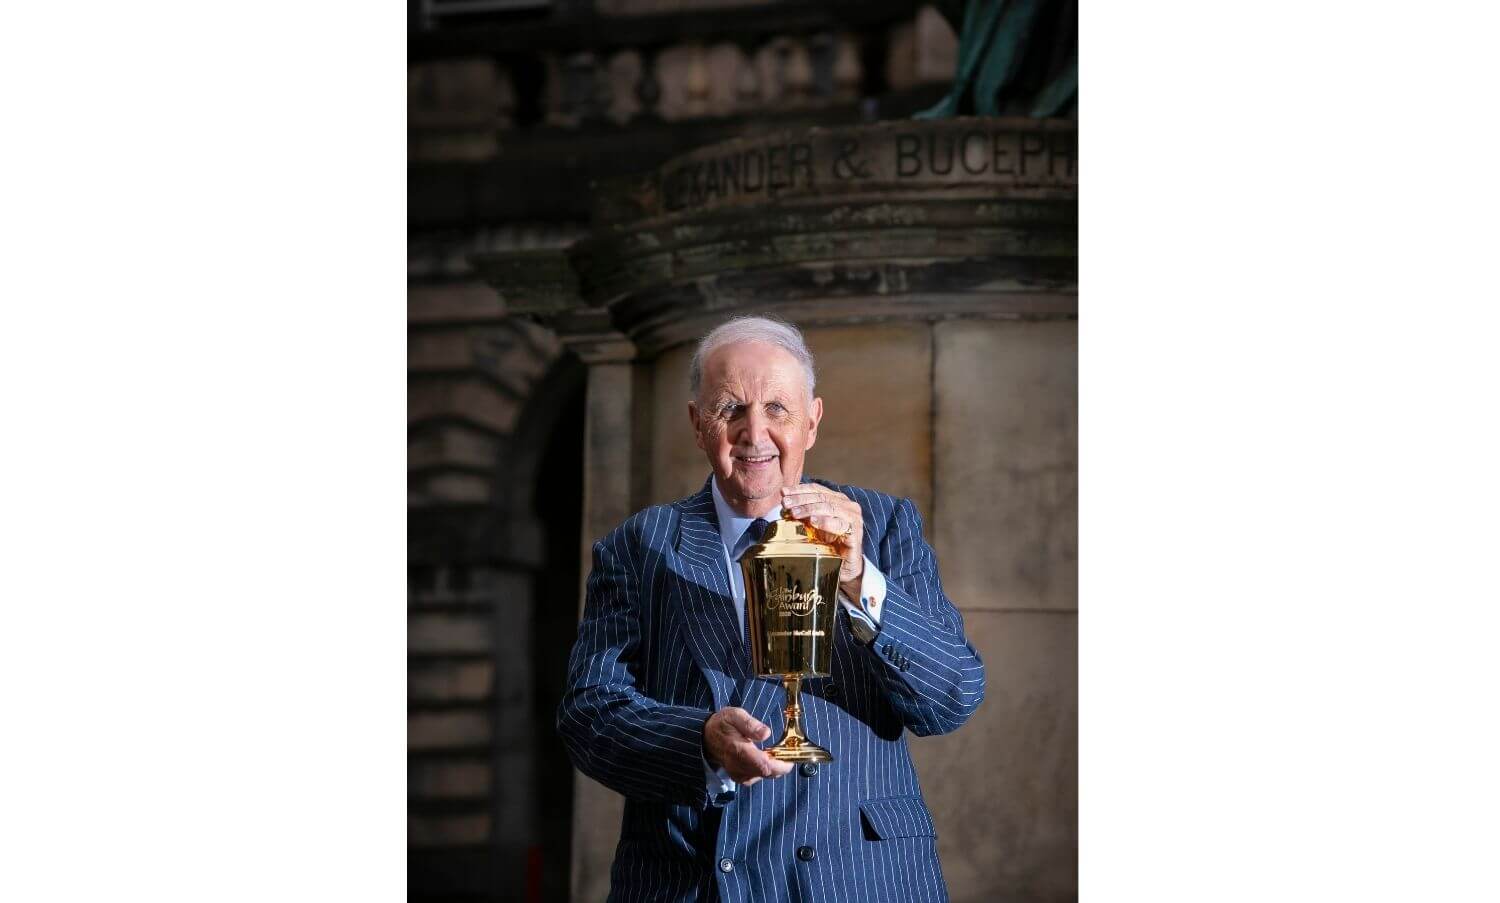 Alexander McCall smith holding the Edinburgh Award Loving Cup in the City Chambers Quadrangle.